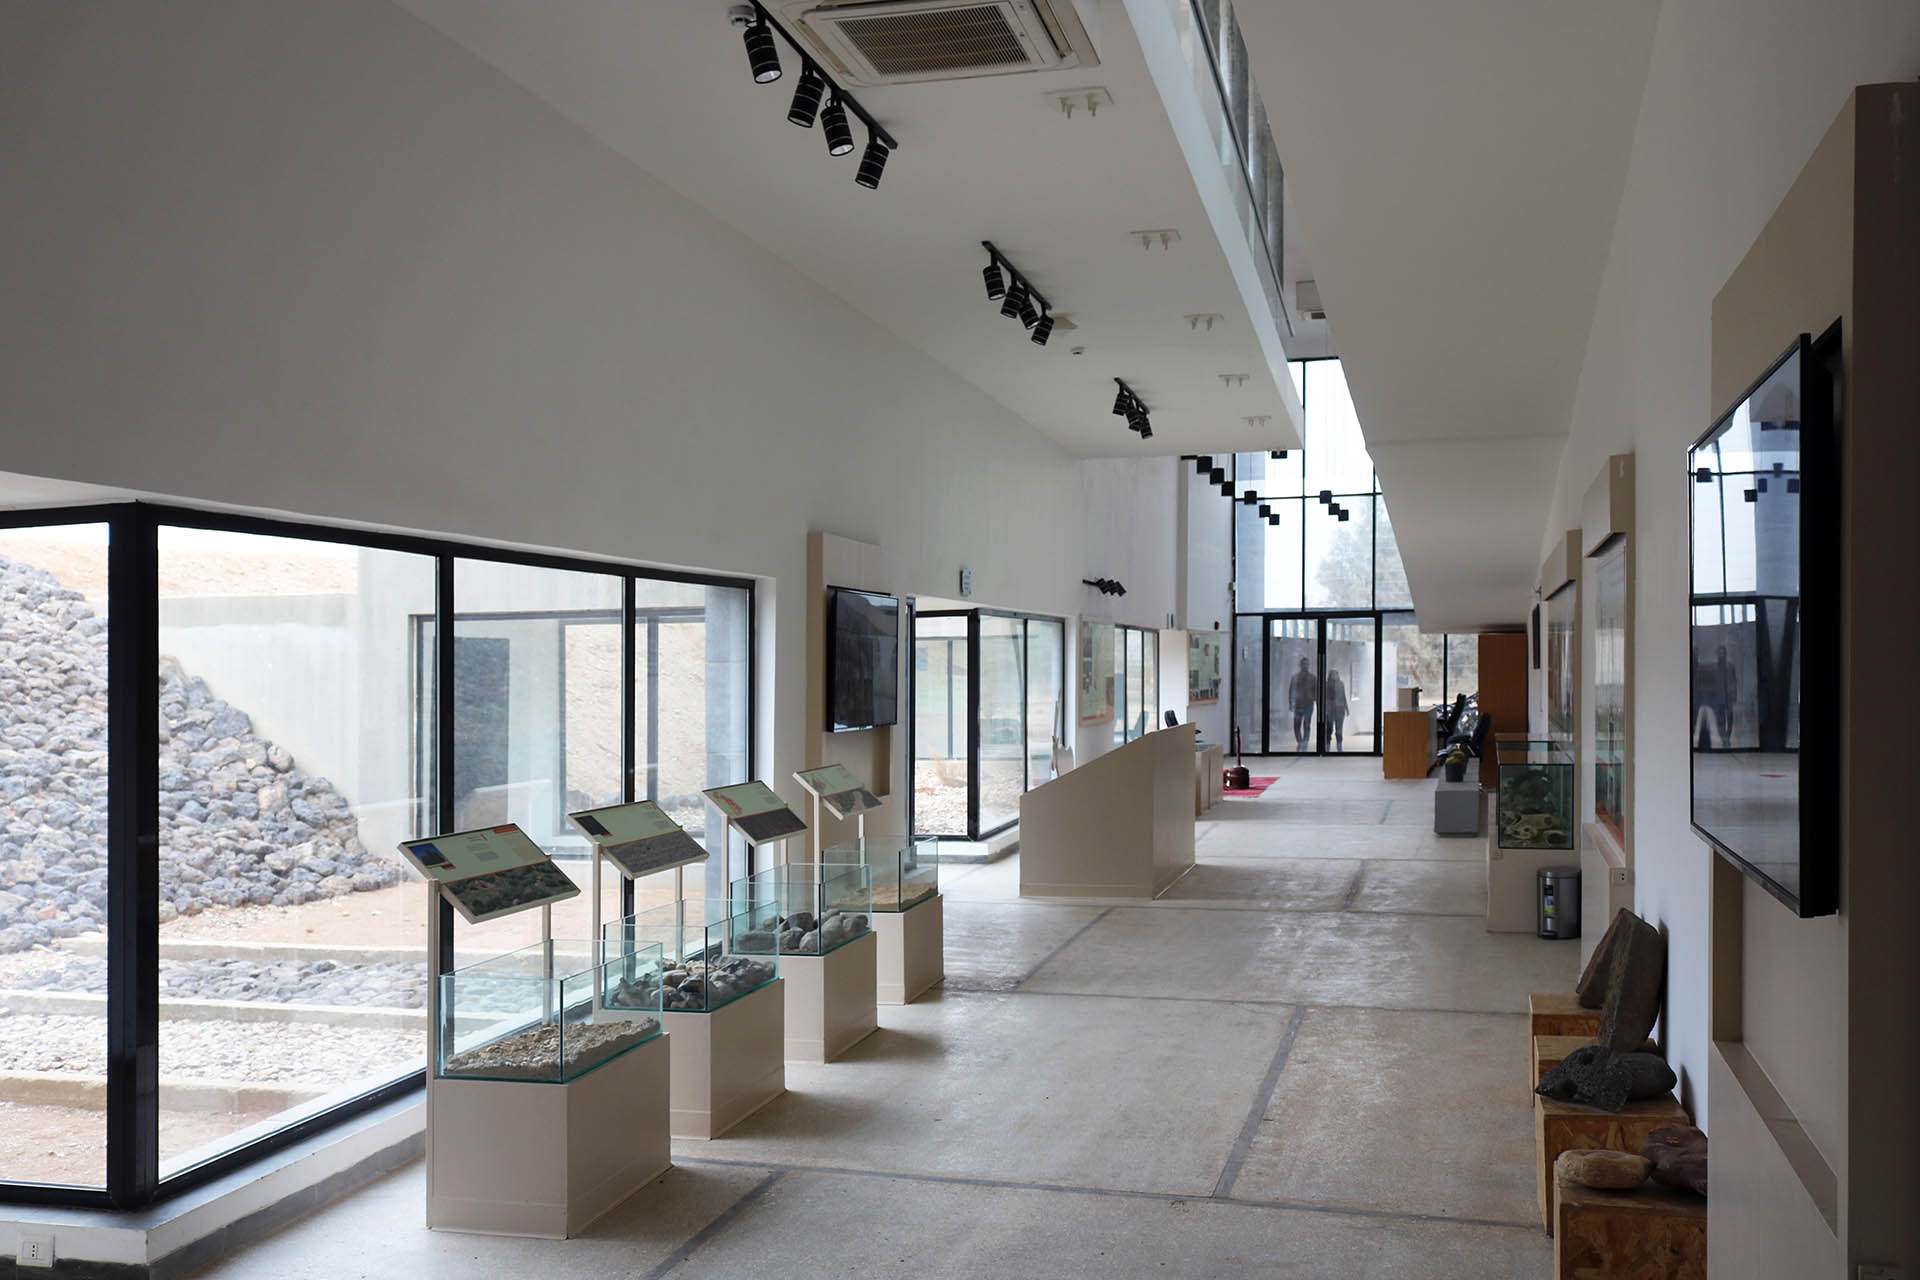 <p>Interior of visitor center showing furniture holding interpretation materials</p>